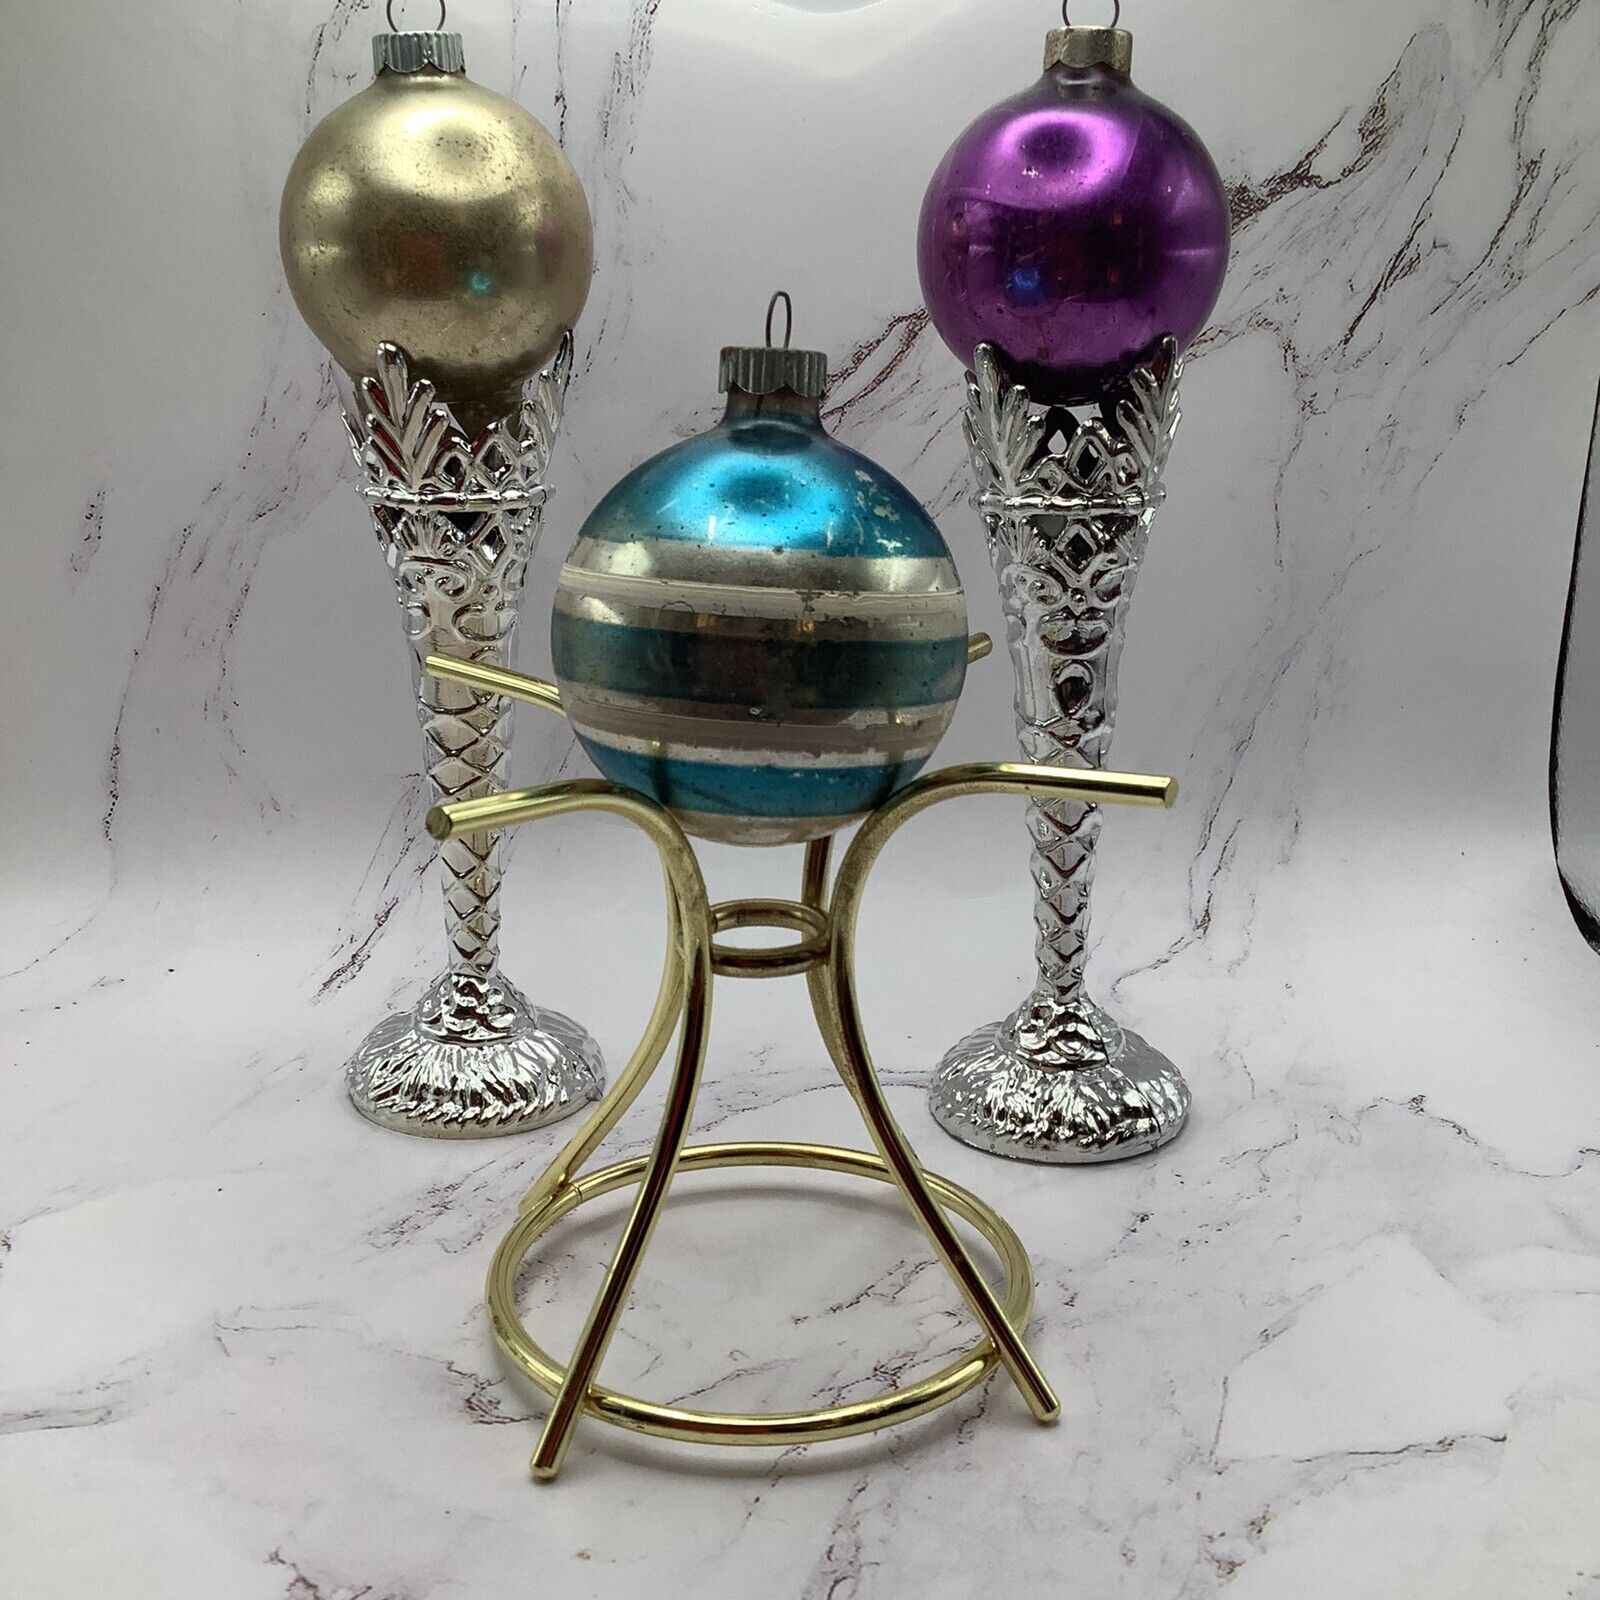 Vintage Shiny Brite Mercury Glass Ornaments 1950’s/60’s